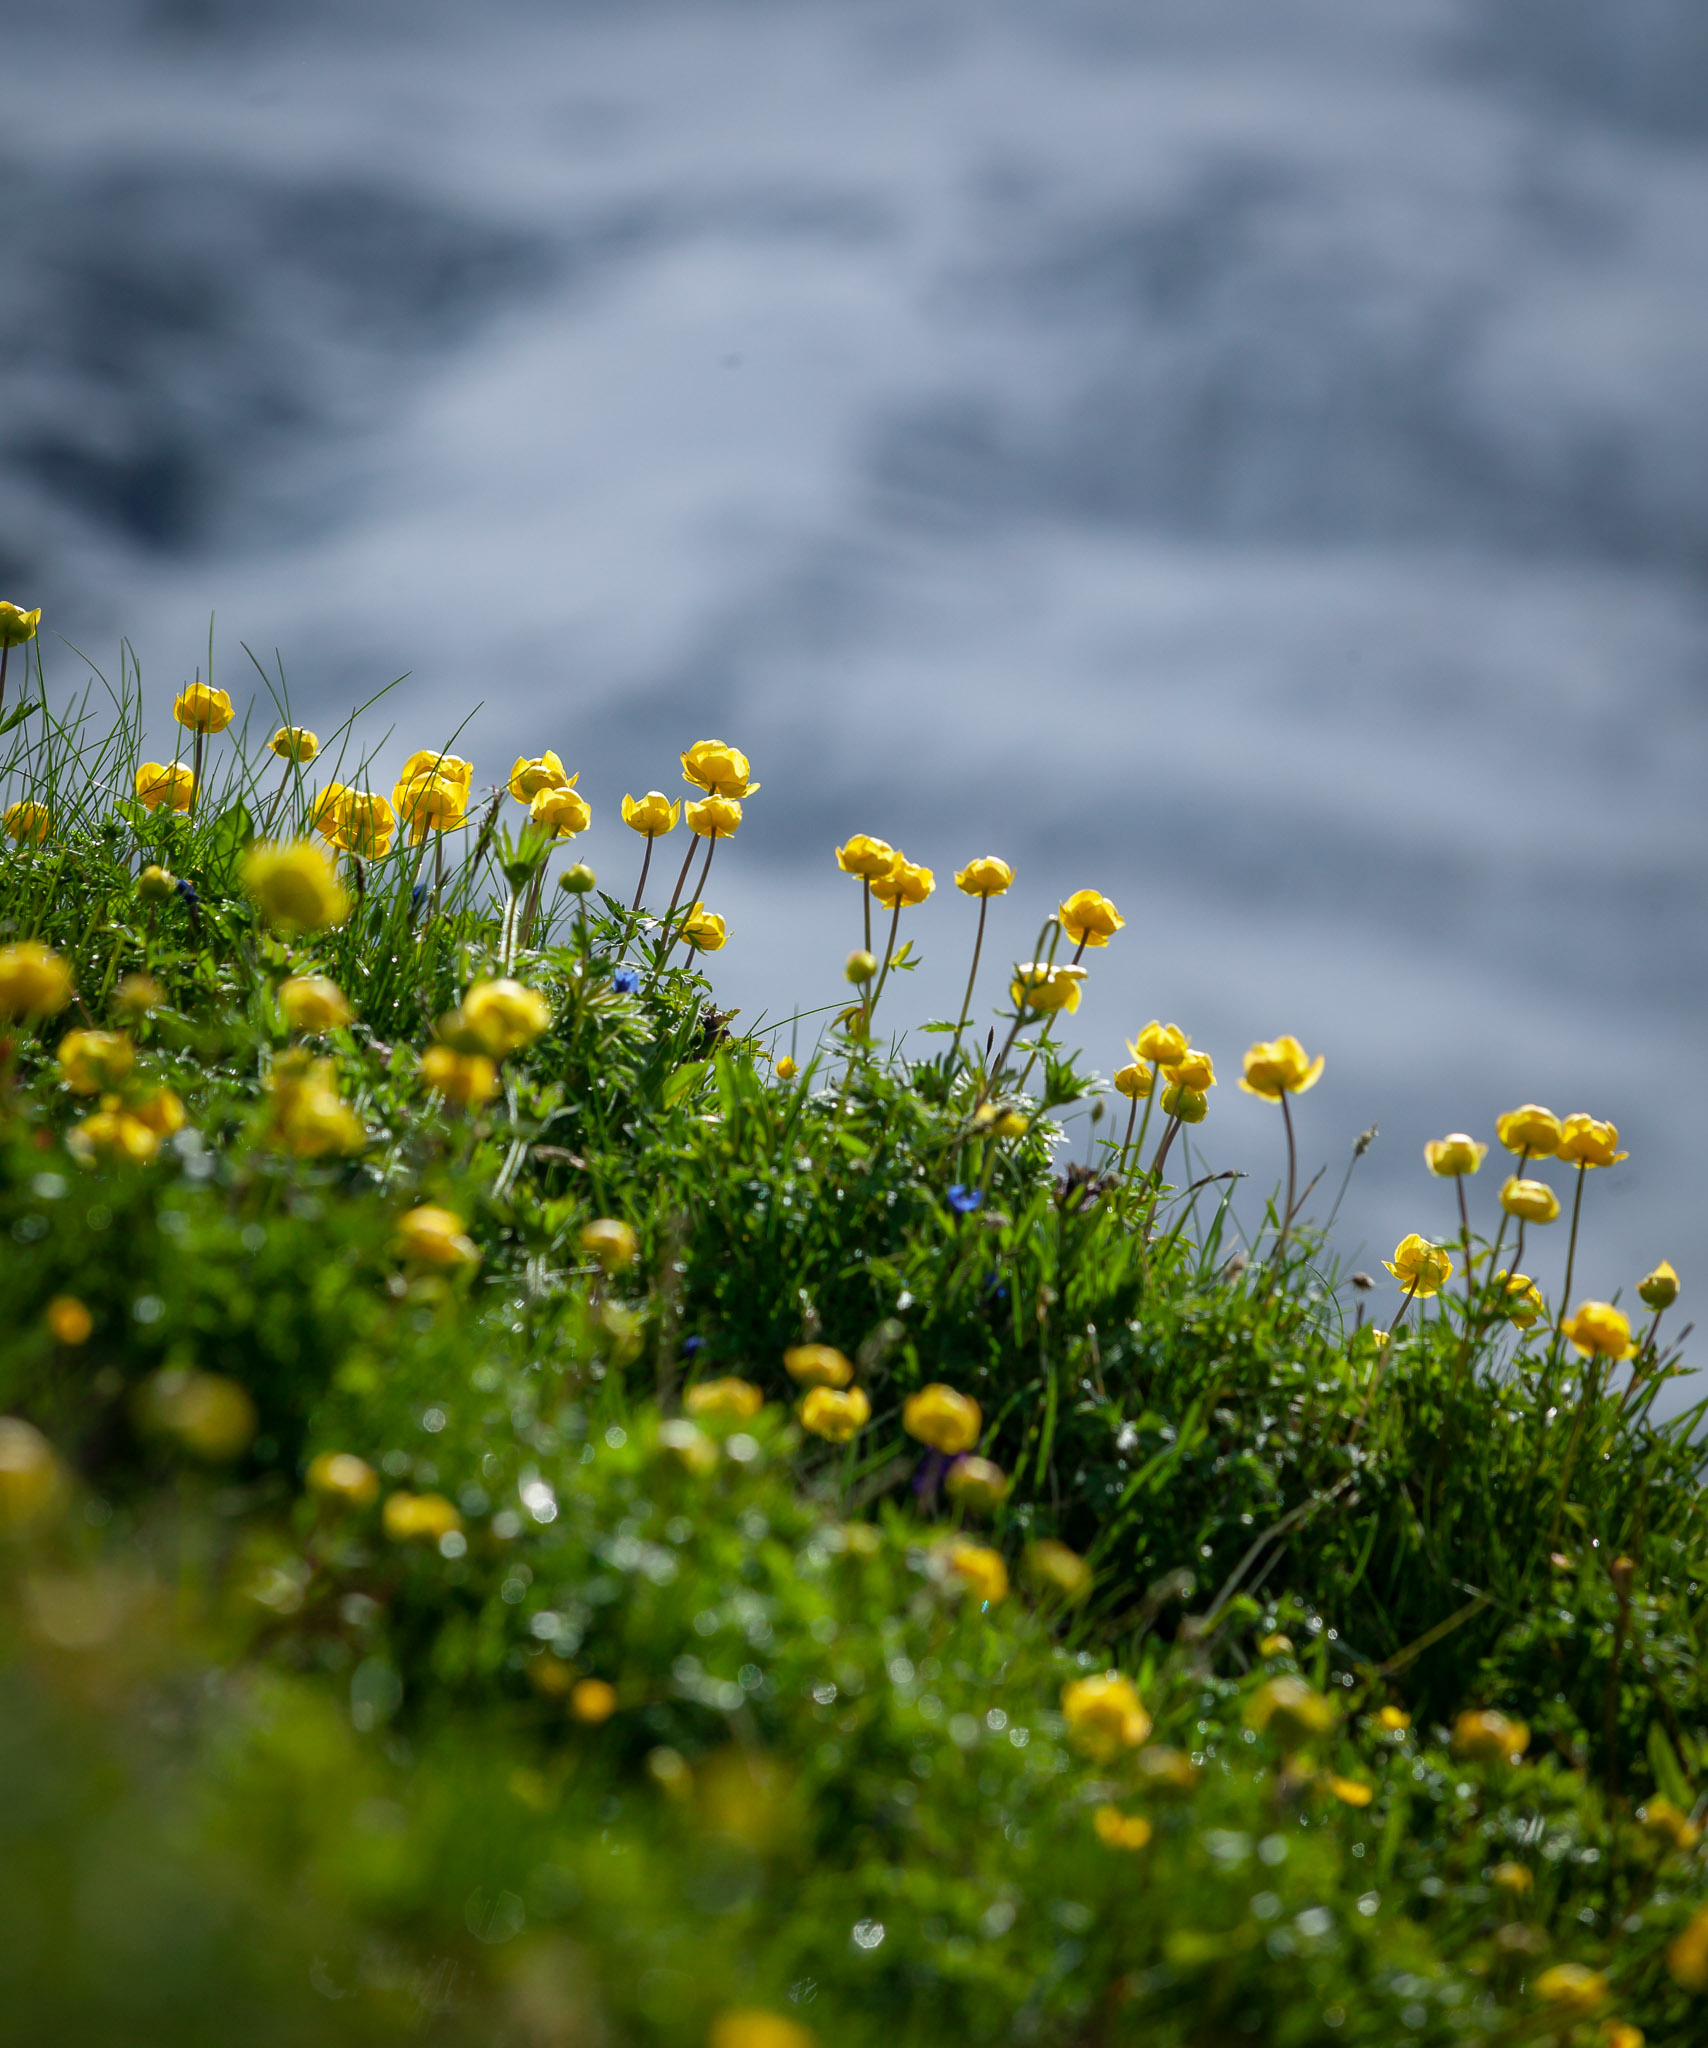 Wildflowers beneath the Eiger